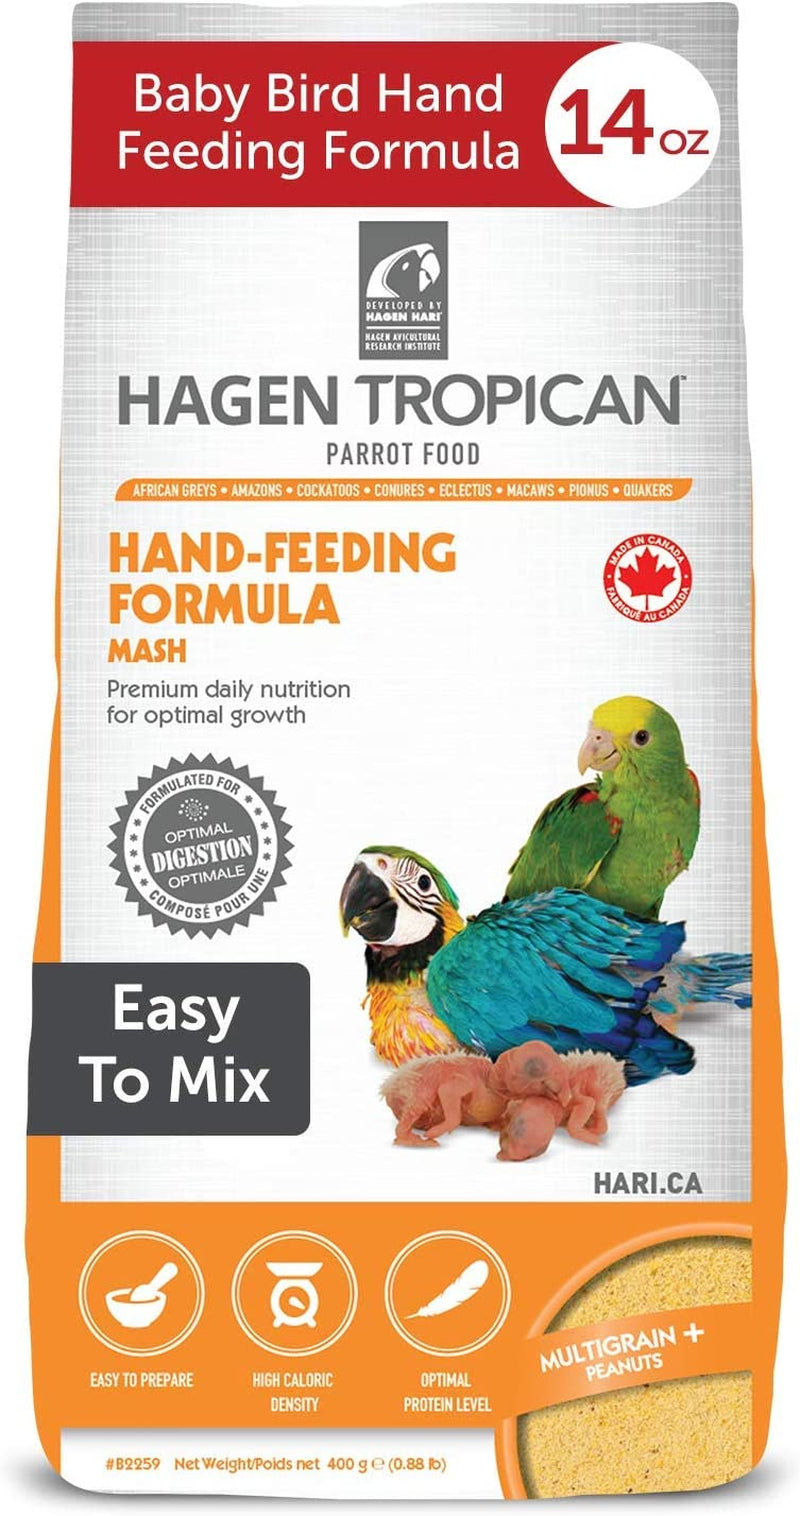 Hari Tropican Bird Food, Hagen Parrot Food Hand Feeding Formula, Easy to Mix, 14 Oz Bag Animals & Pet Supplies > Pet Supplies > Bird Supplies > Bird Food Hari 14 oz  